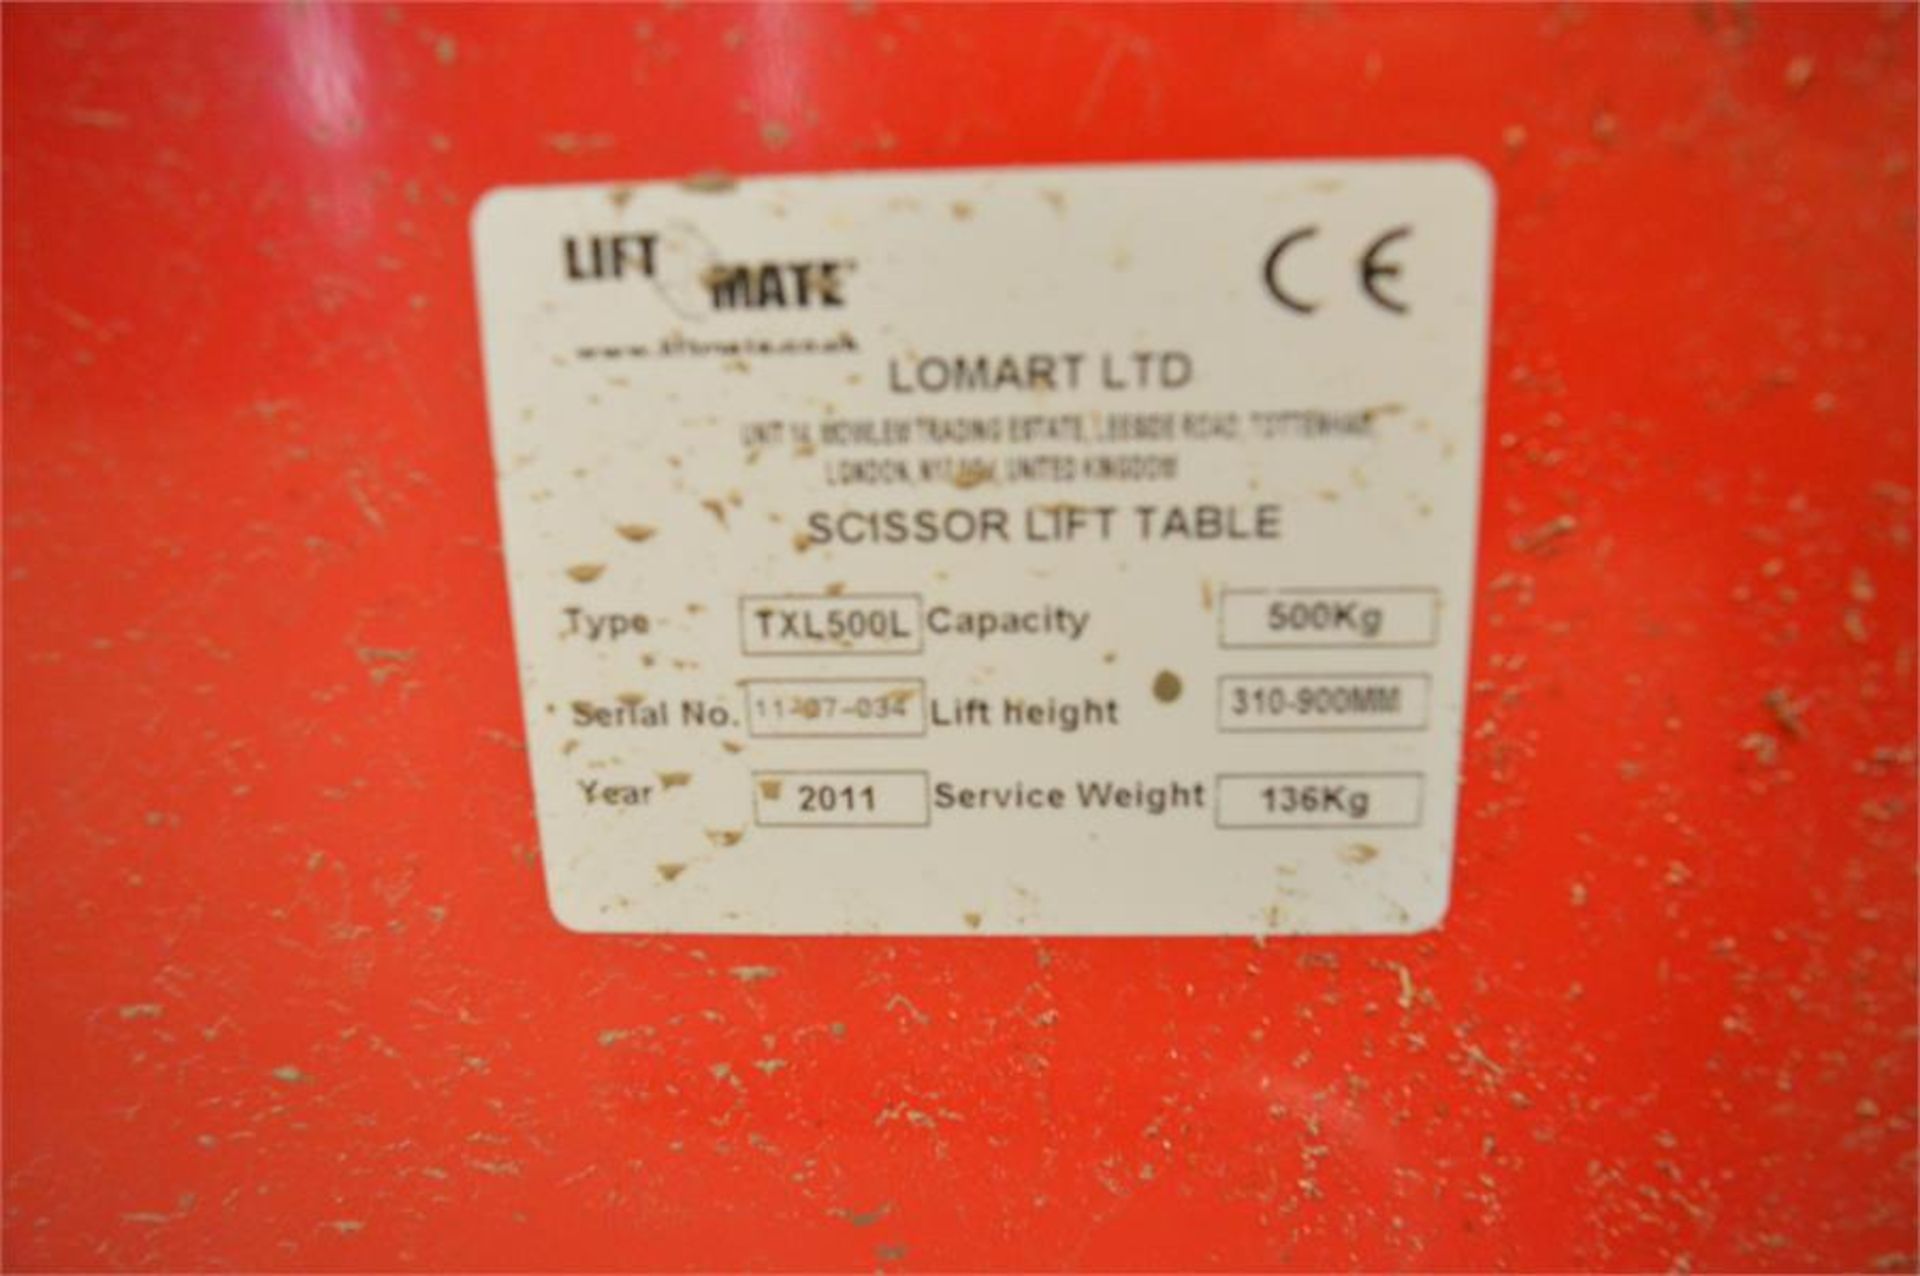 Lift Mate, TXL500L, 500kg mobile scissor lift table, Serial No. 11-07-034 (2011), lift height 310- - Image 2 of 2